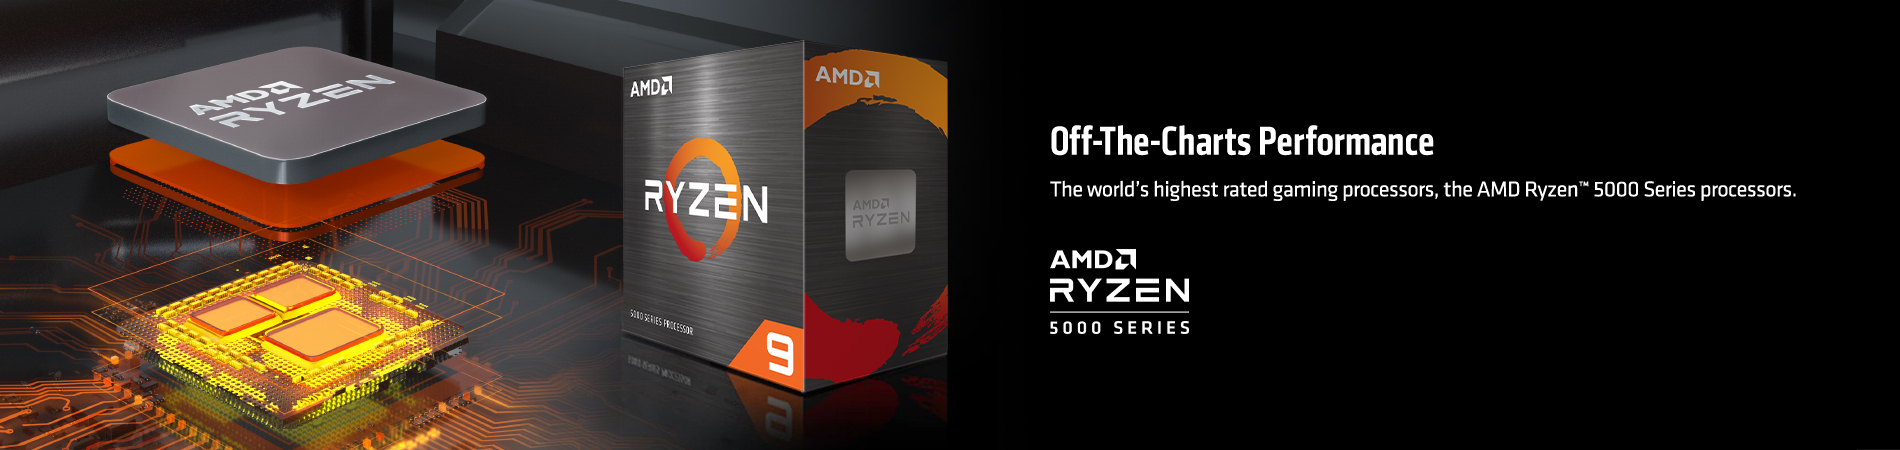 AMD Ryzen  Banners 01.31.banner3